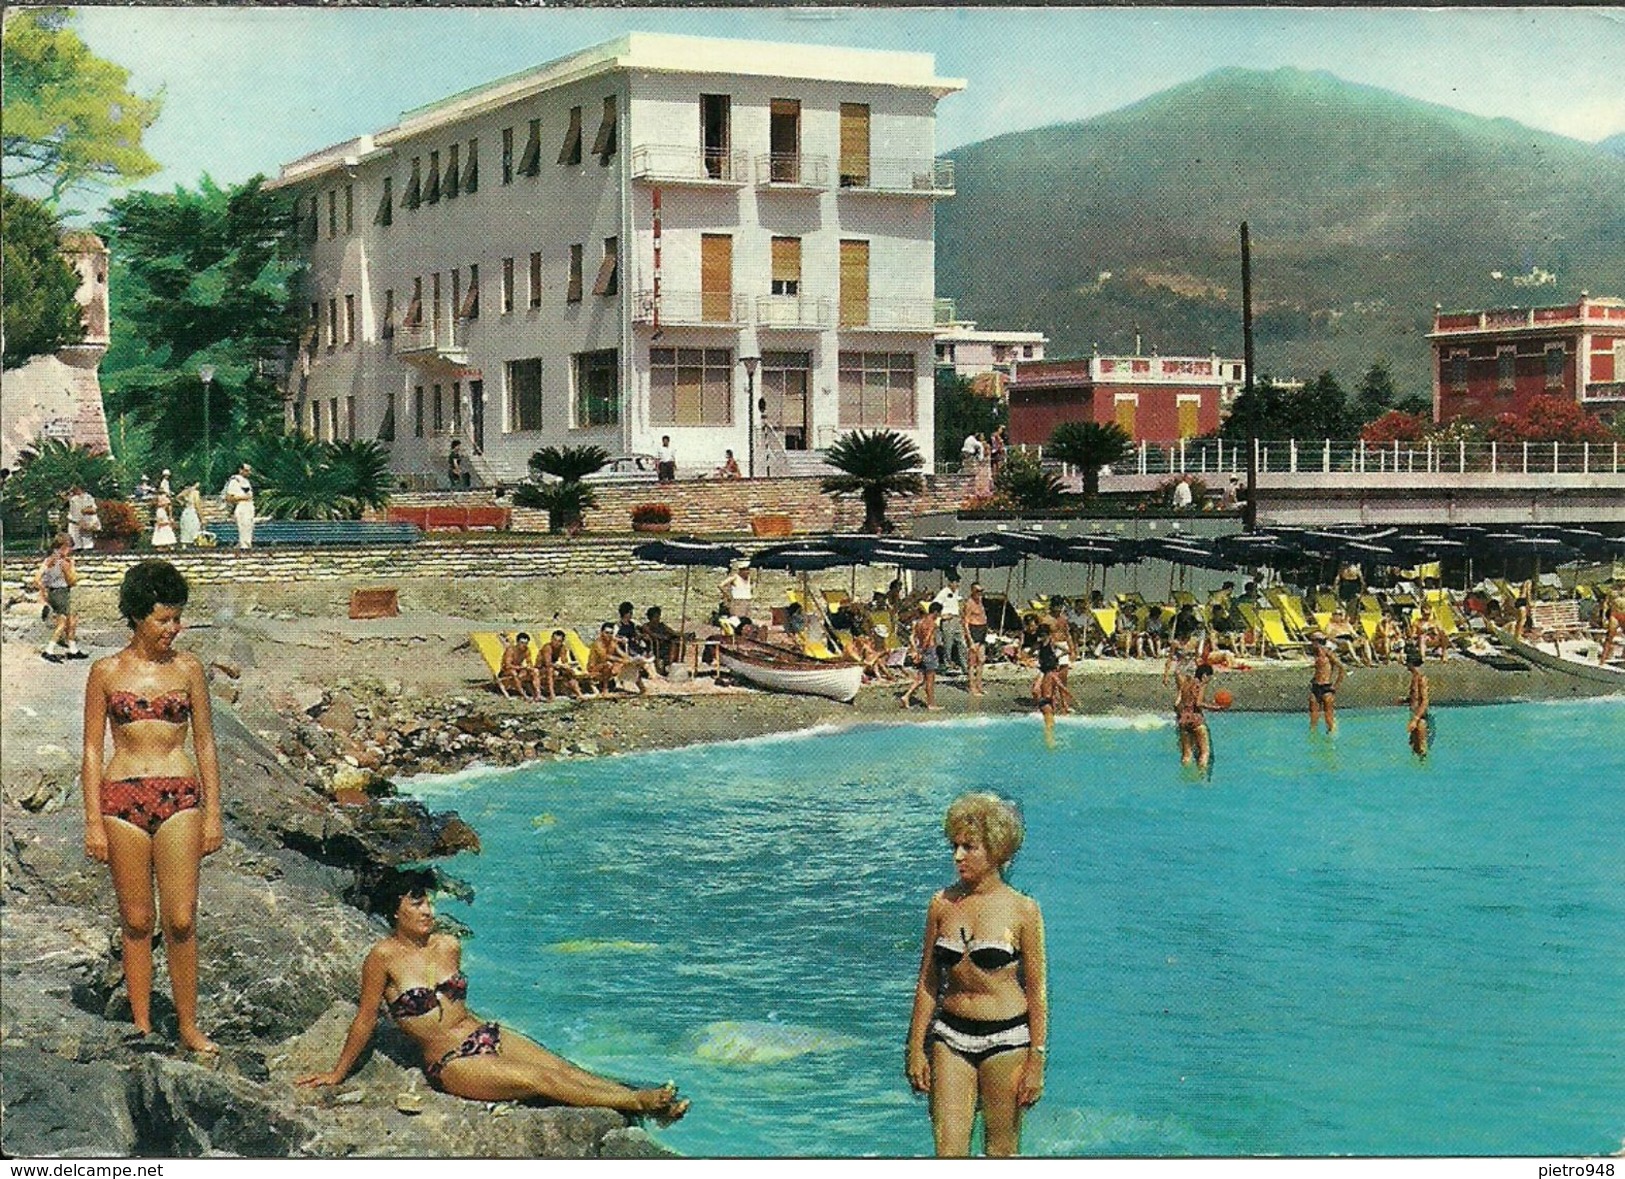 Loano (Savona, Liguria) Hotel Savoia, Spiaggia E Bagnanti Sugli Scogli, Savoia Hotel And Beach, Hotel Savoia Et Plage - Savona